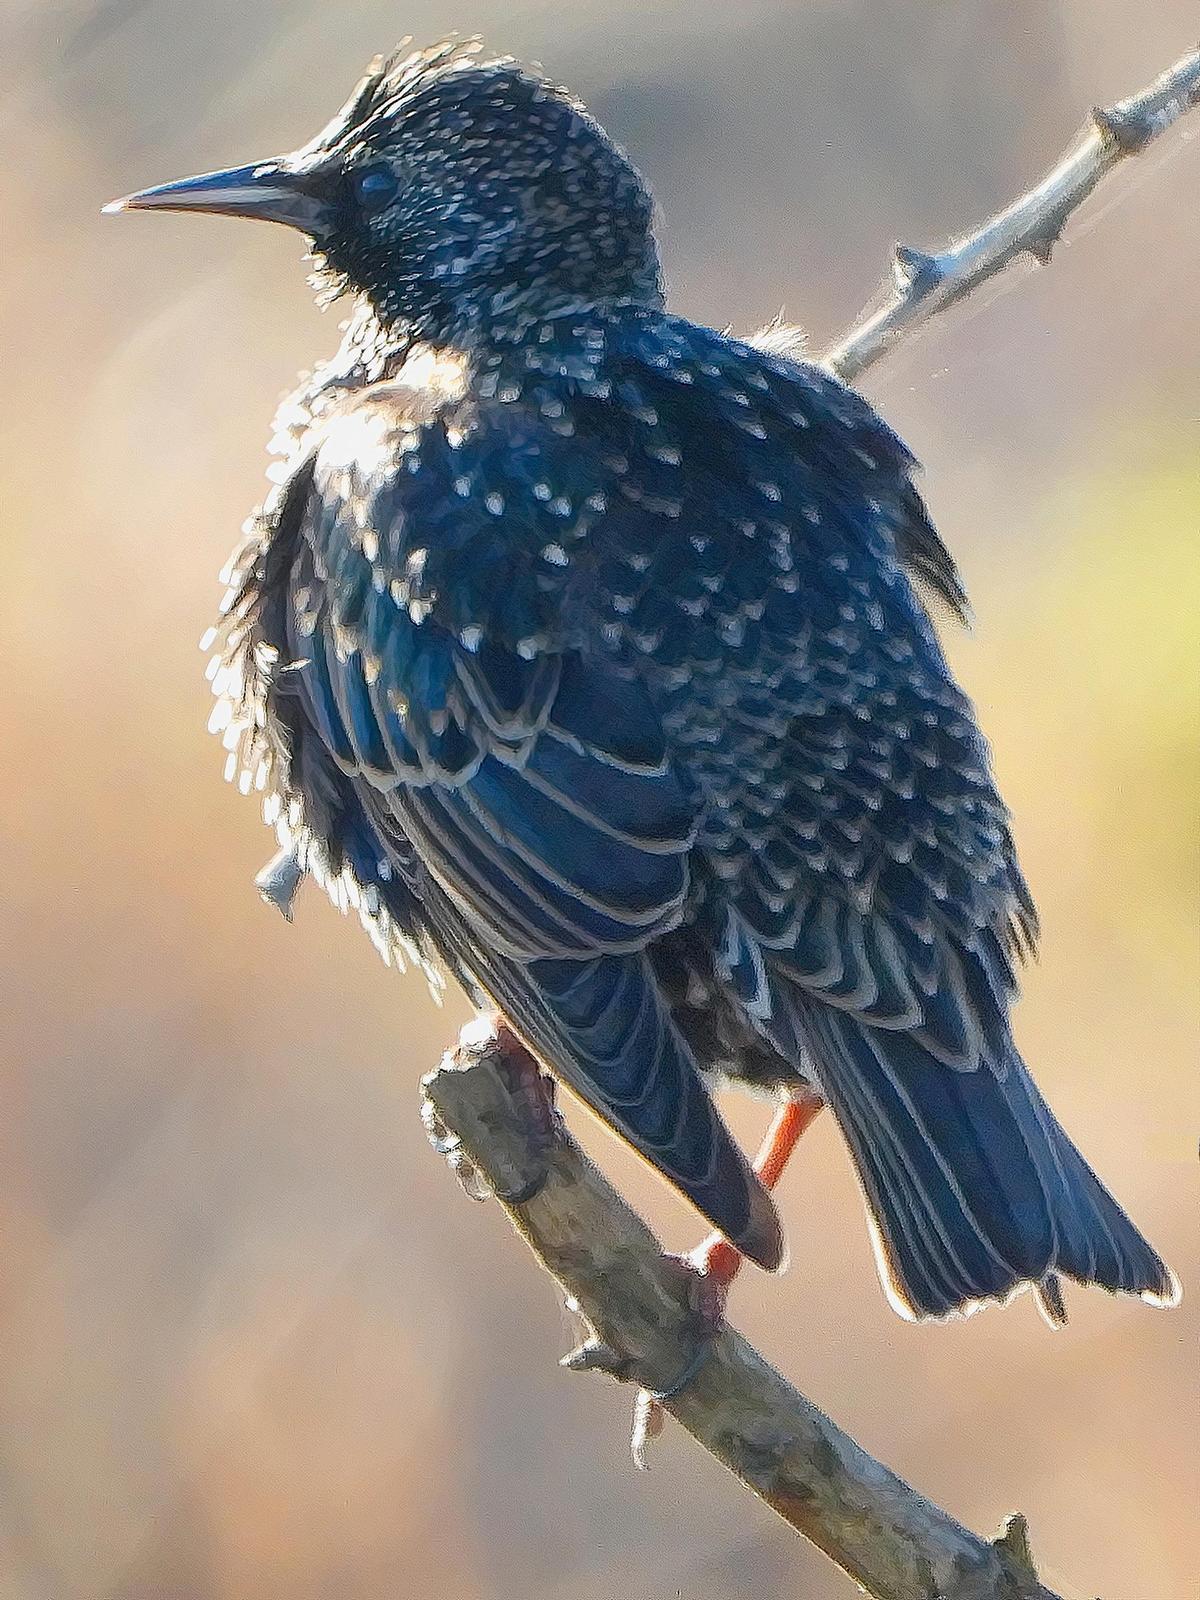 European Starling Photo by Dan Tallman